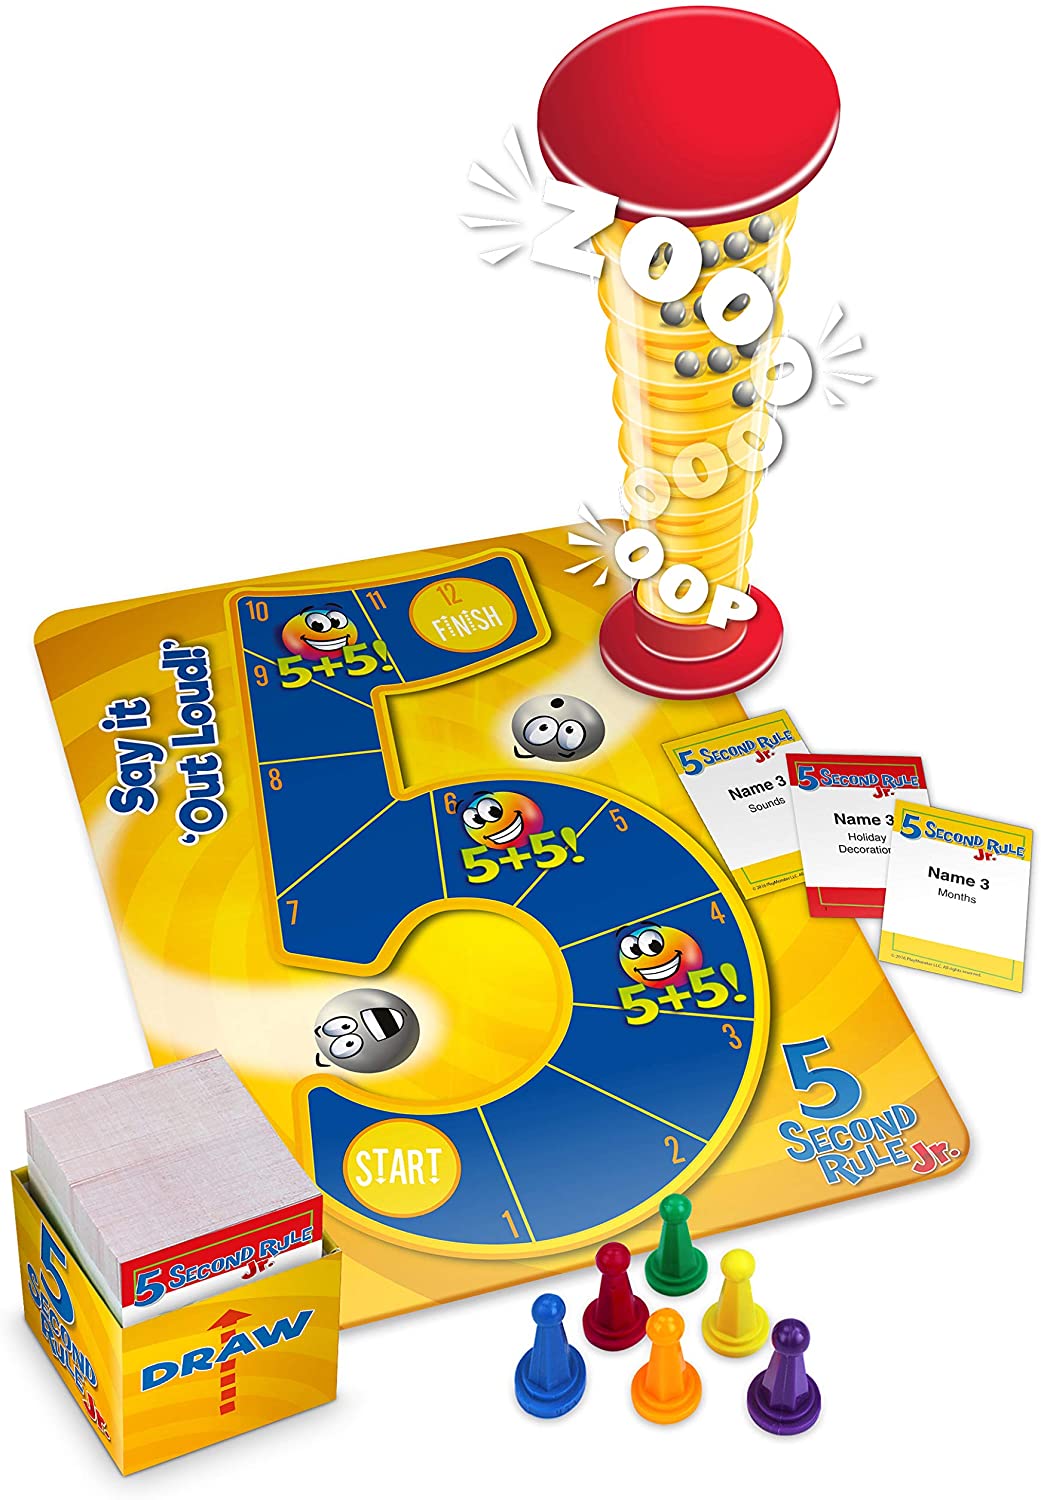 PlayMonster GF002 5 Second Rule Junior Family Card Game, Multi